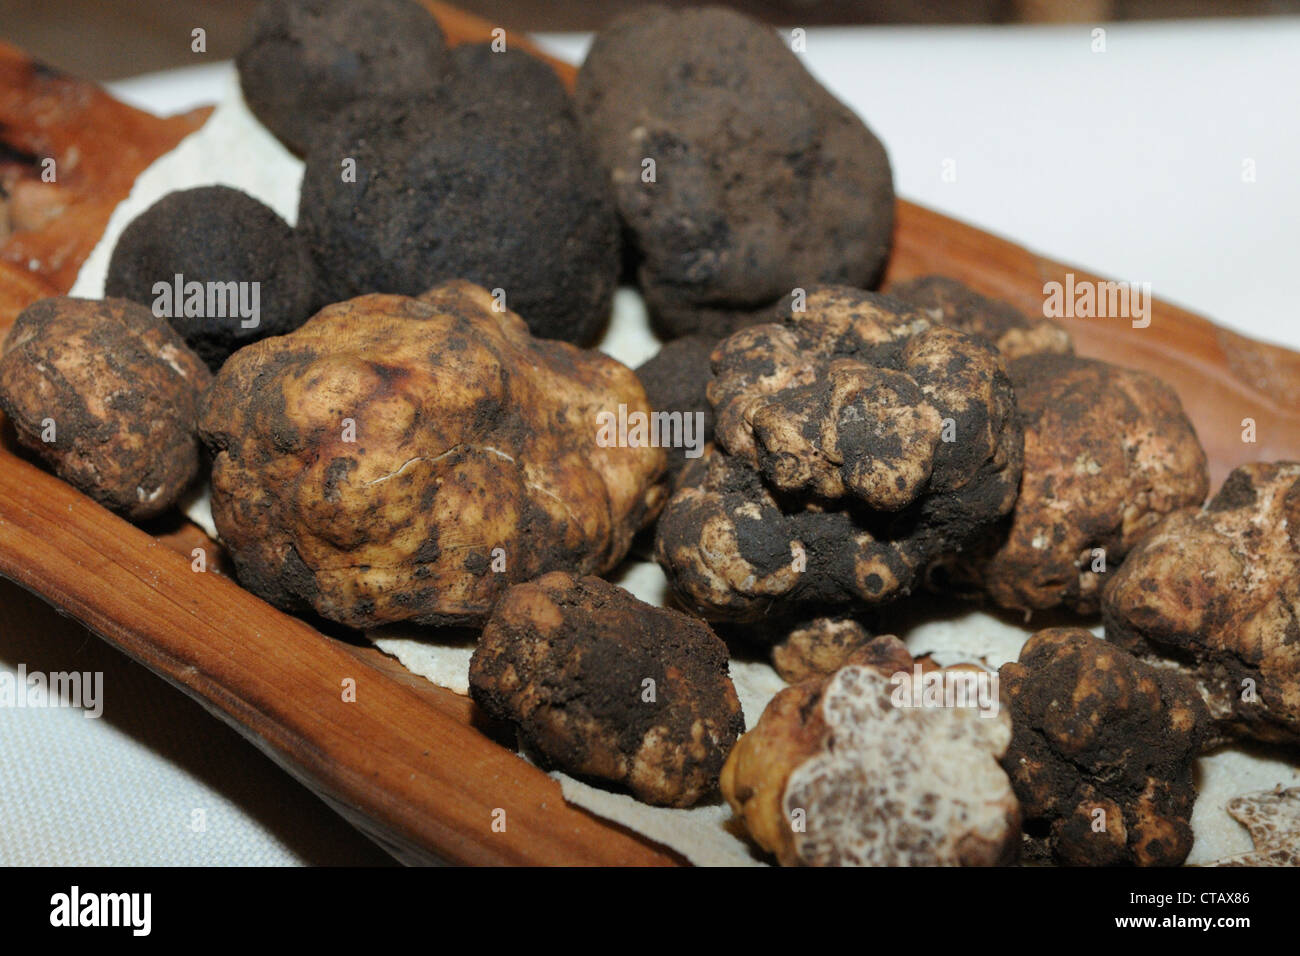 A basket full of blacks and white truffles Stock Photo